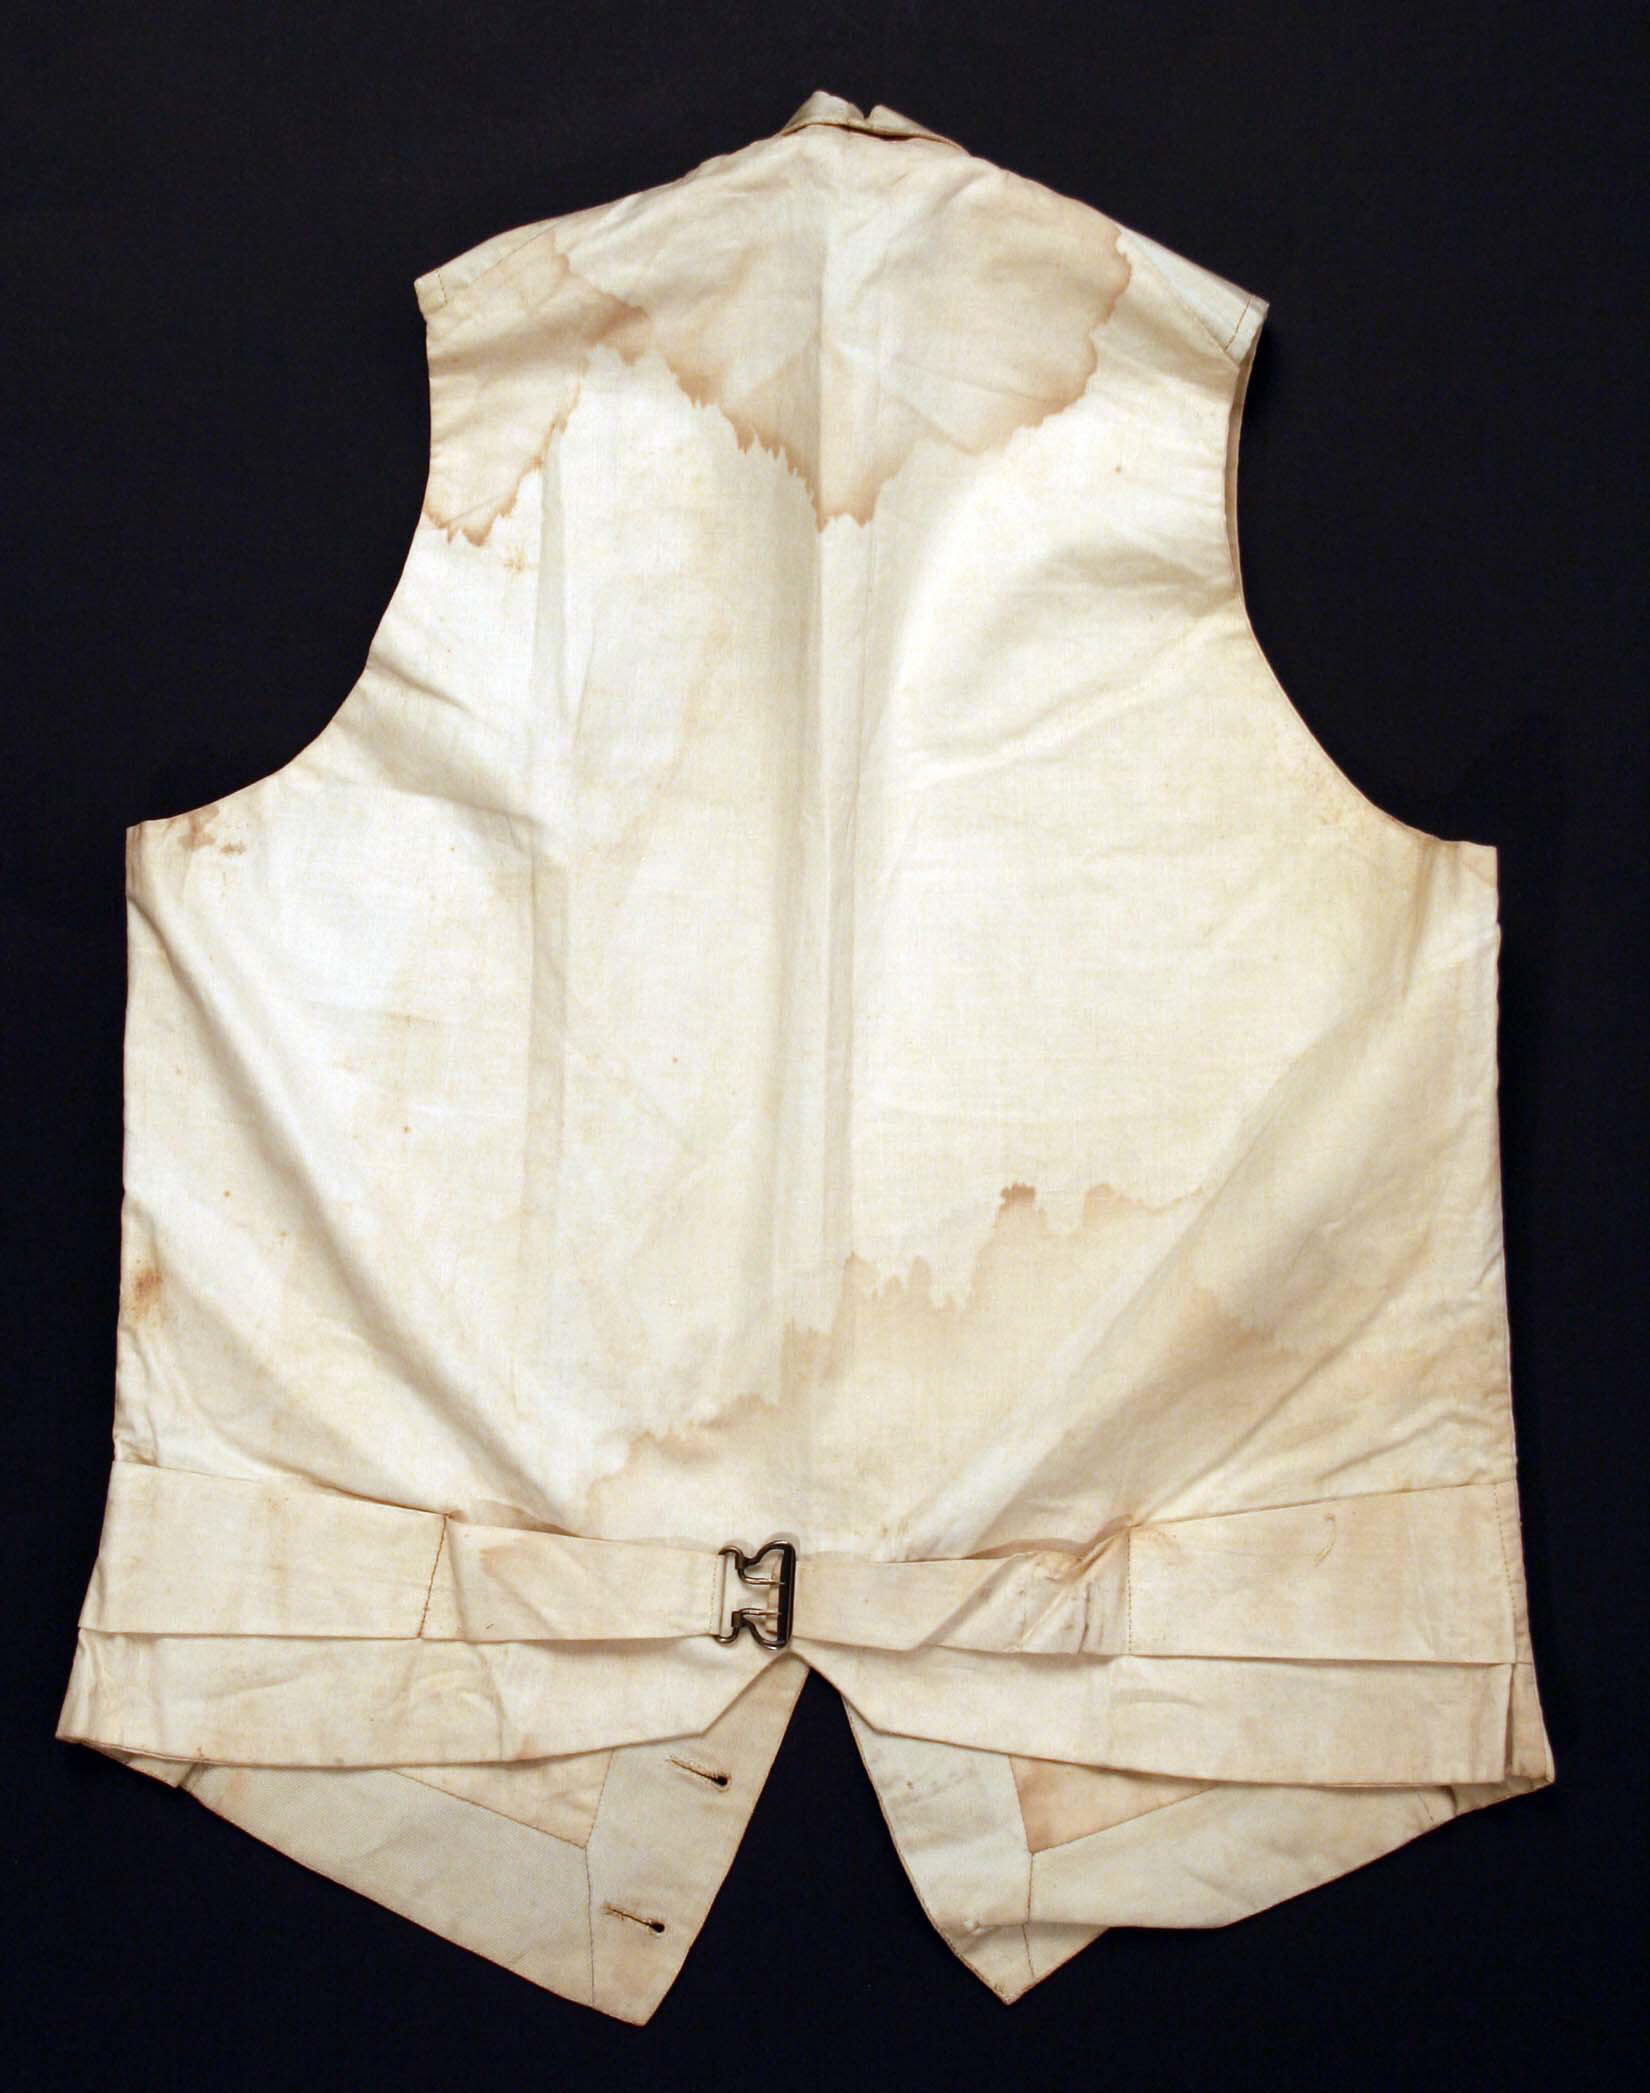 Vest | American or European | The Metropolitan Museum of Art